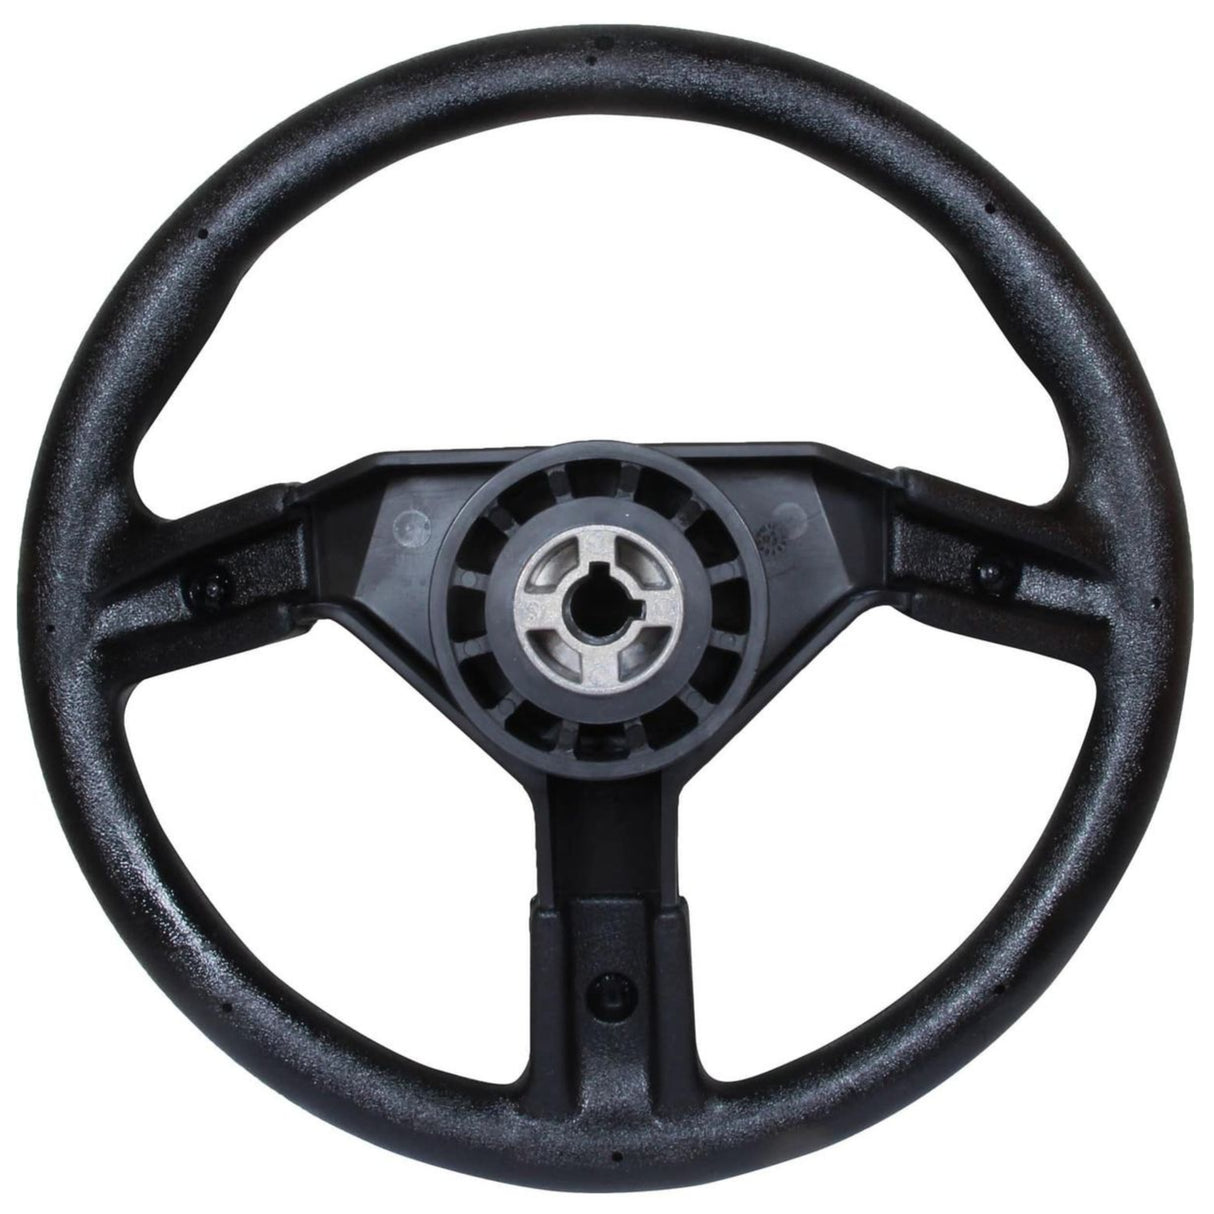 Ultraflex Marine Sports Steering Wheel (350mm / Black) - PROTEUS MARINE STORE